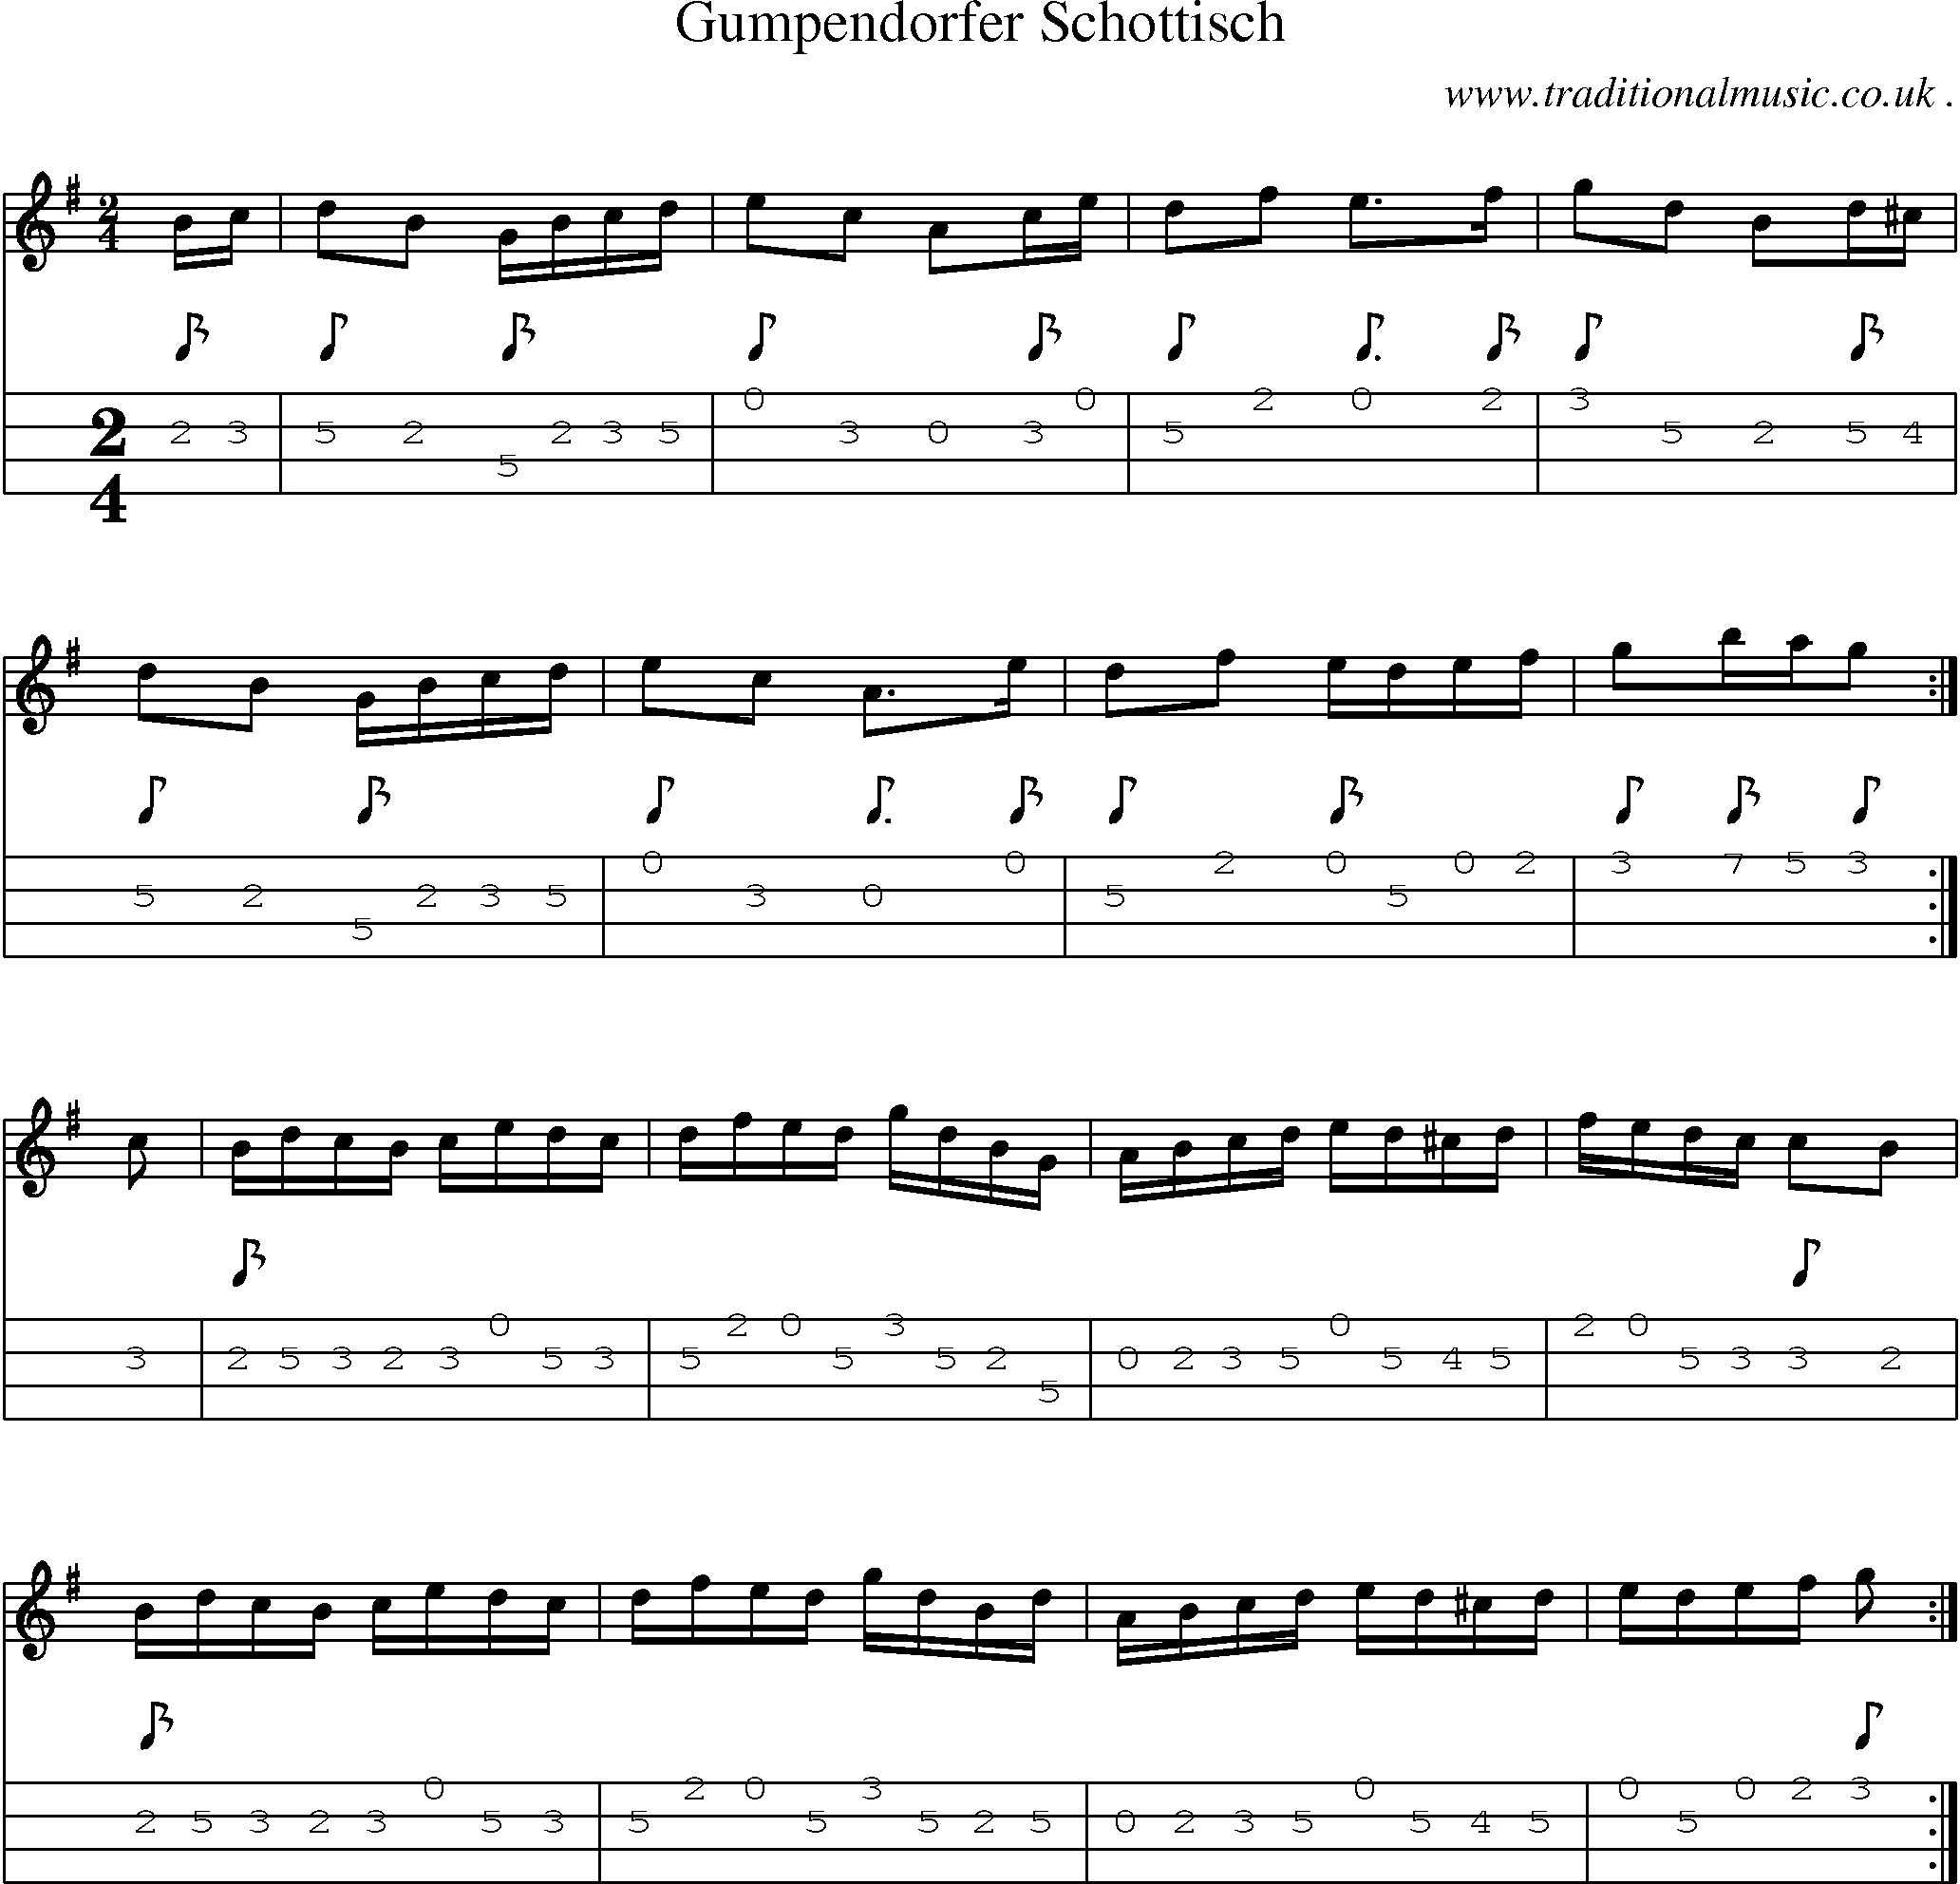 Sheet-Music and Mandolin Tabs for Gumpendorfer Schottisch